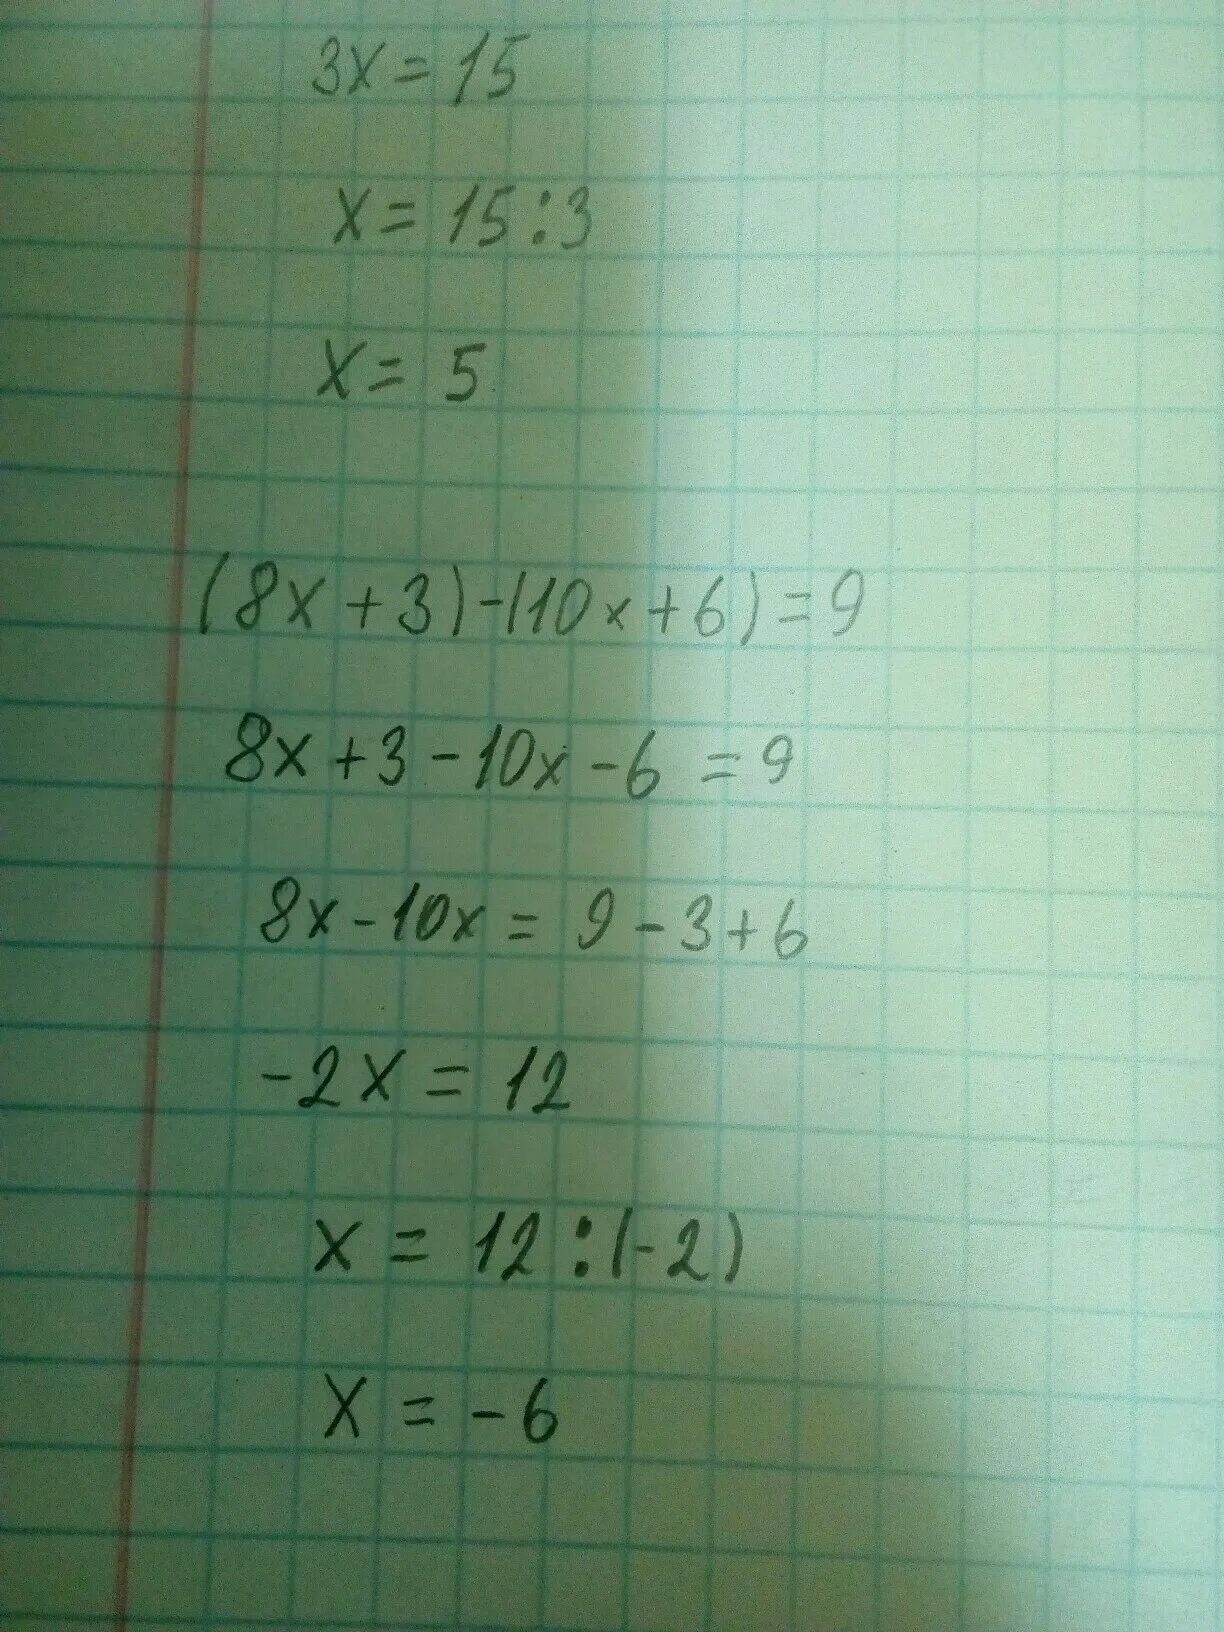 0 5 10x 6 x 6. (10-X)(10+X). (8x+3)-(10x+6)=9. (2x-10)-(3x-4)=6. 4x-10=x+8 ответ.